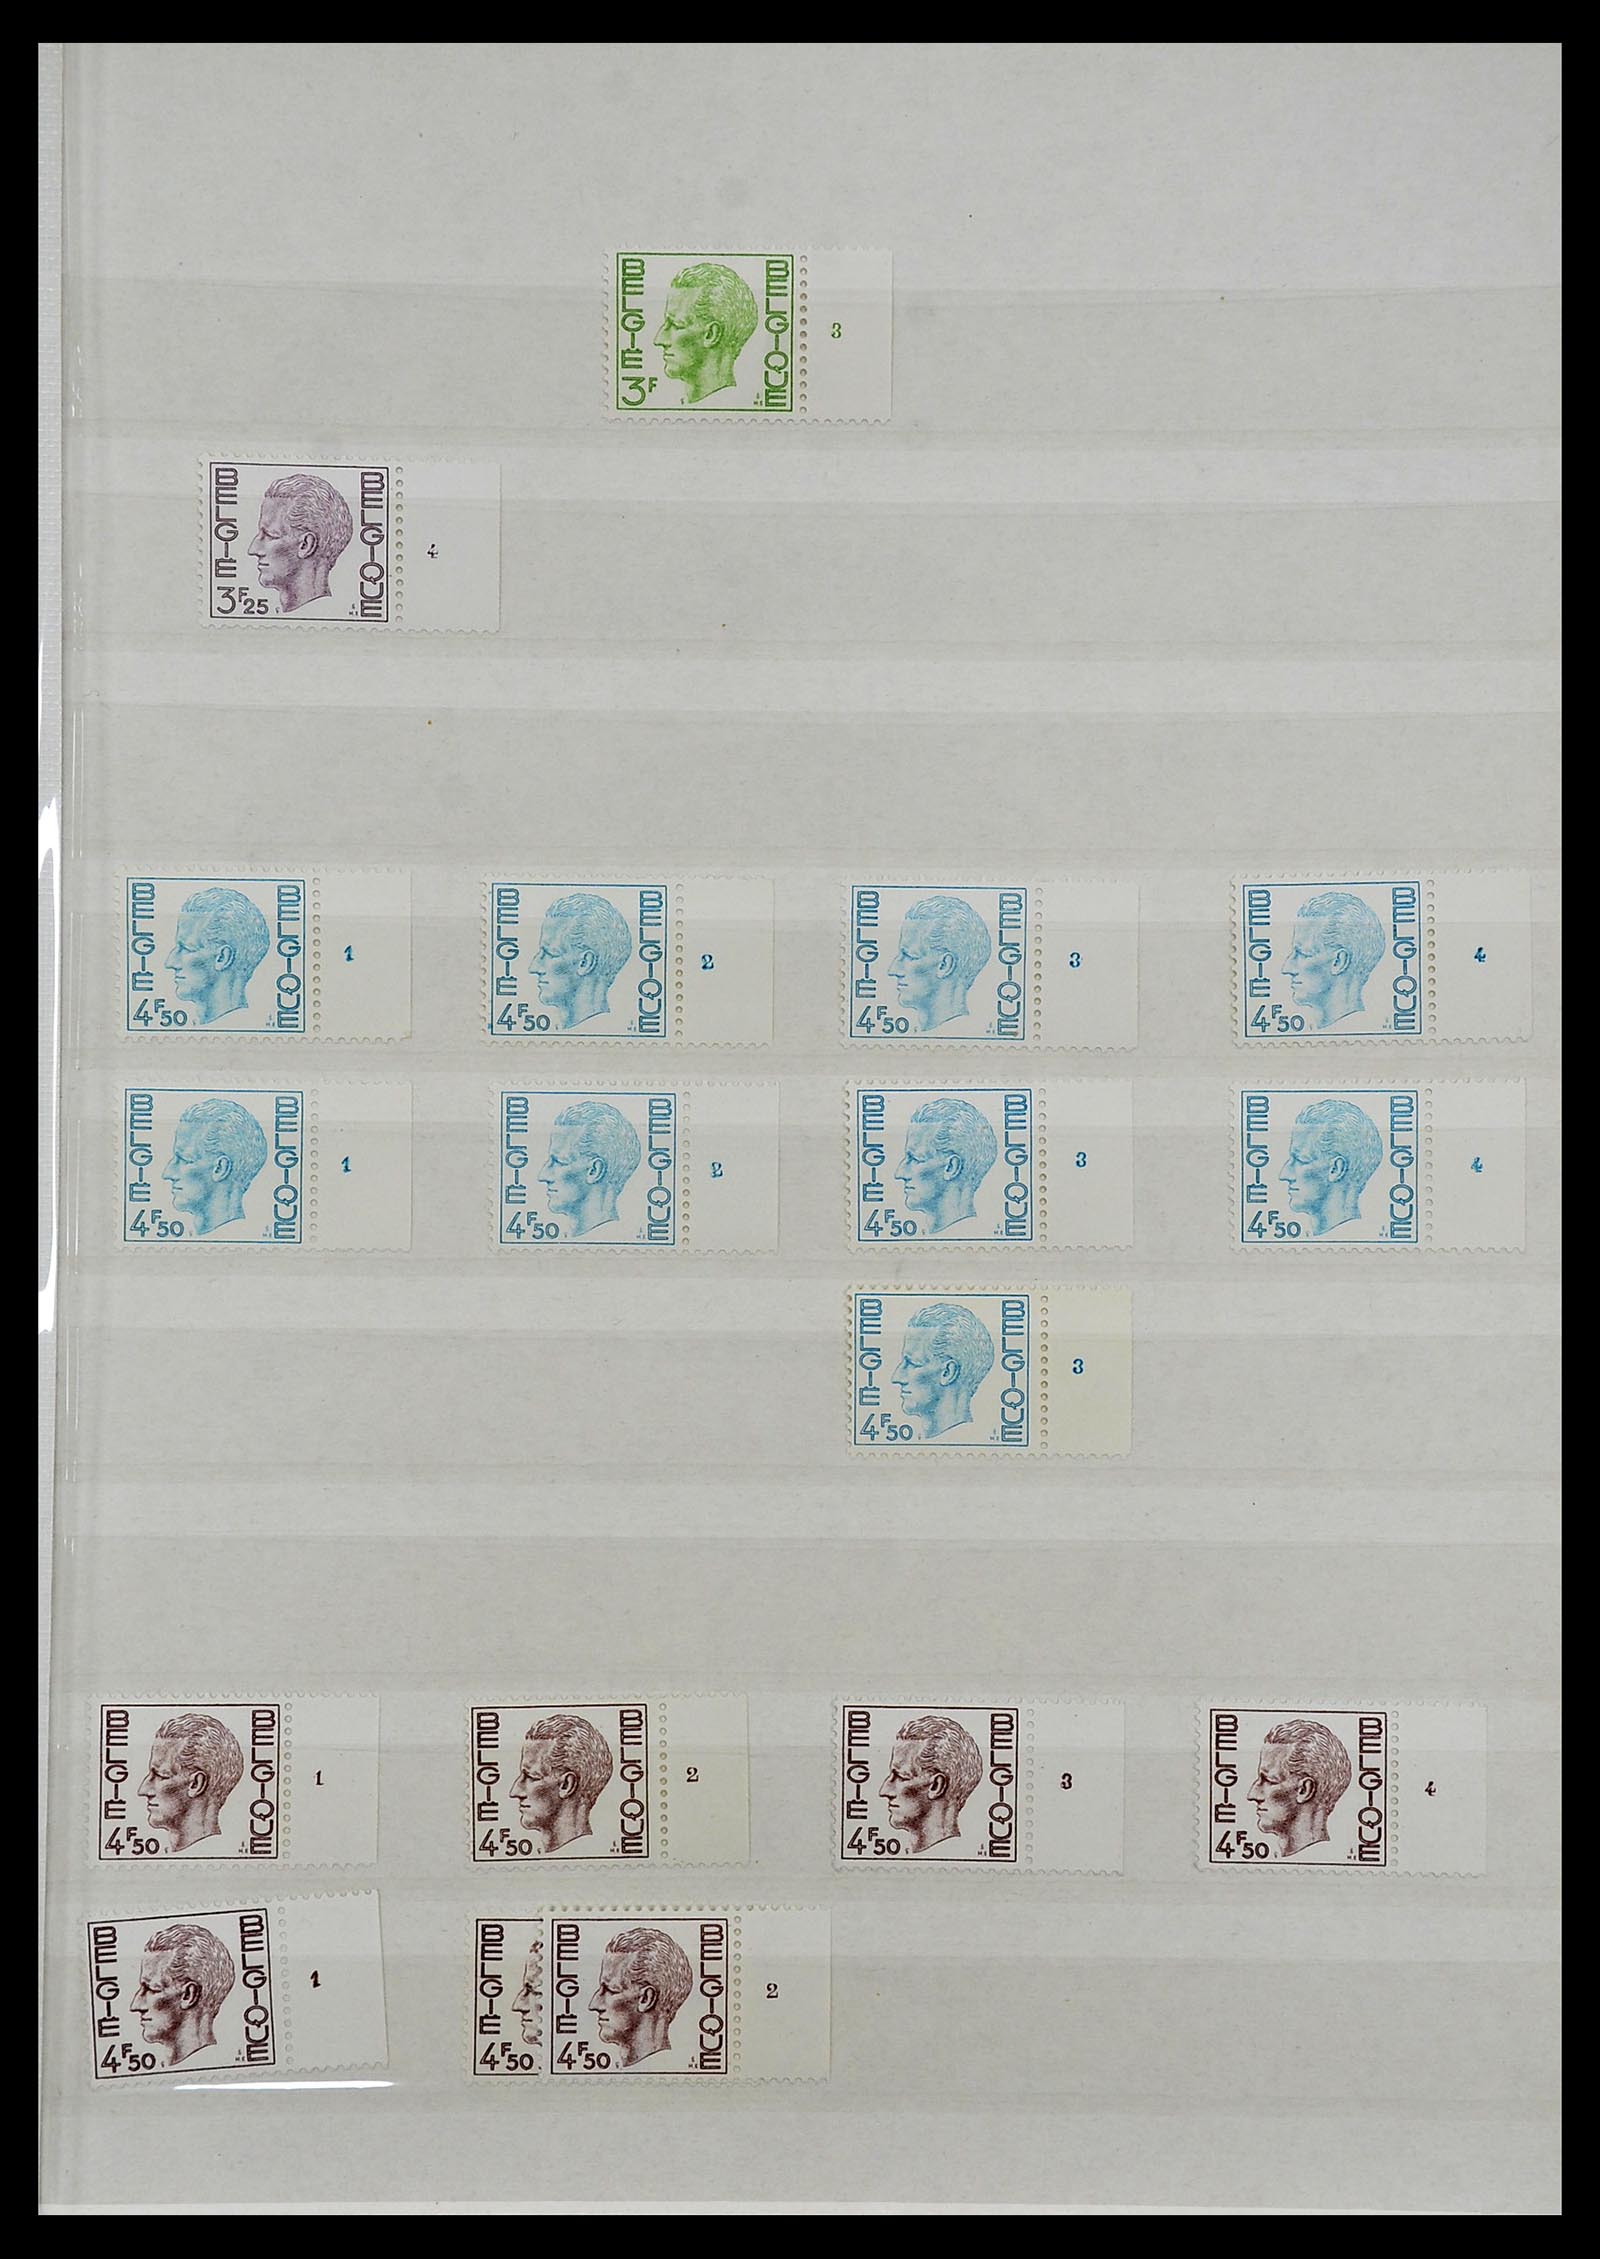 34524 093 - Postzegelverzameling 34524 België plaat en etsingnummers 1963-1990.